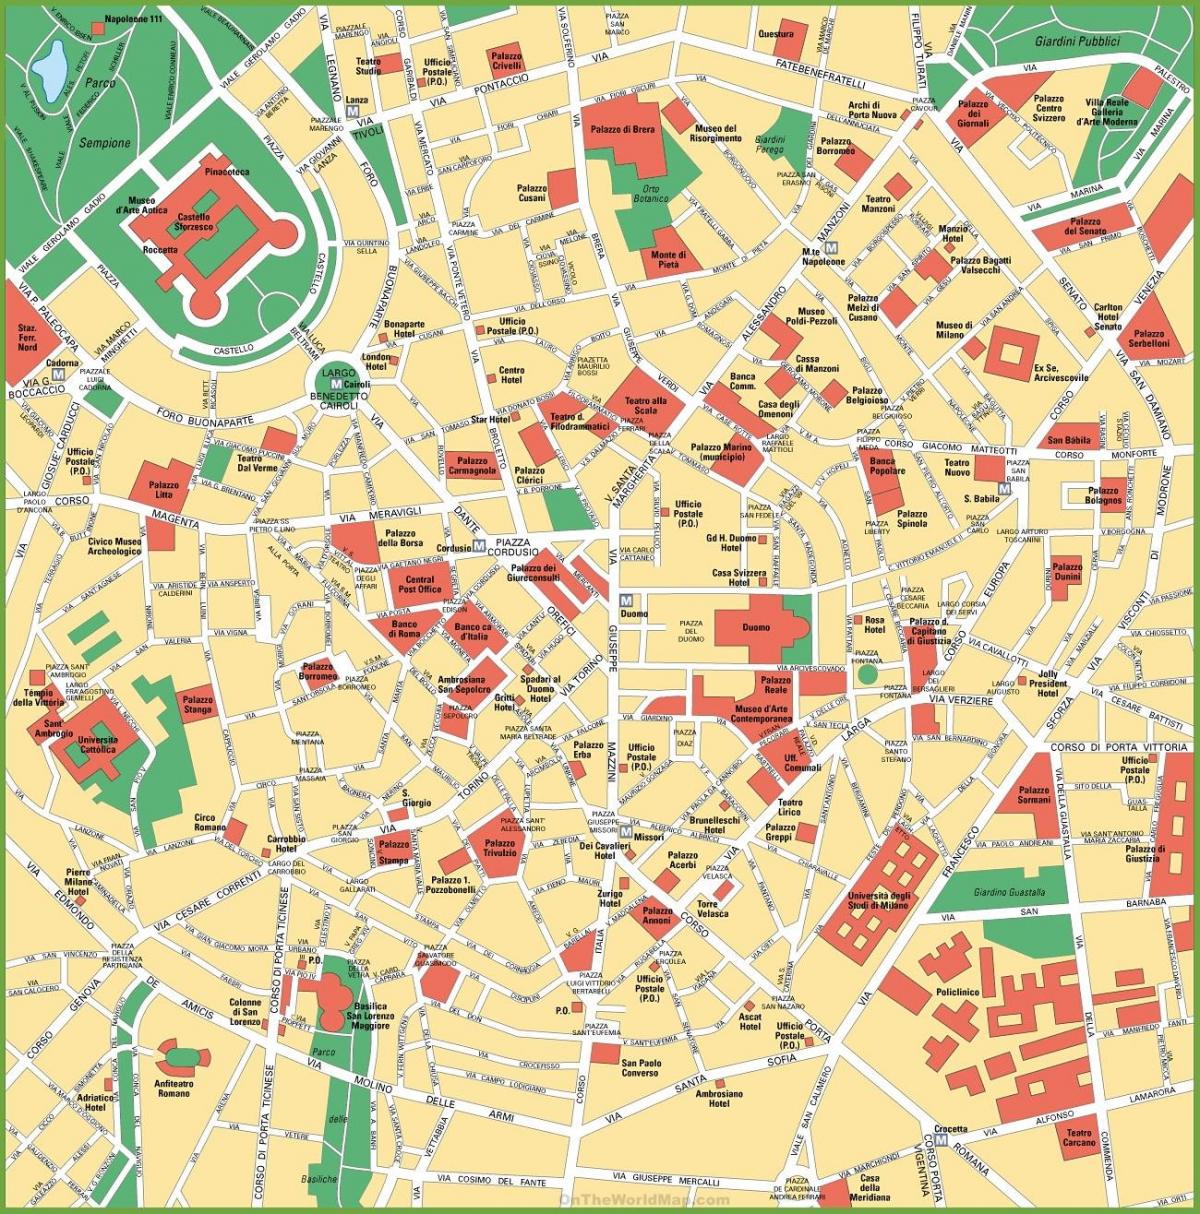 milano city mapu